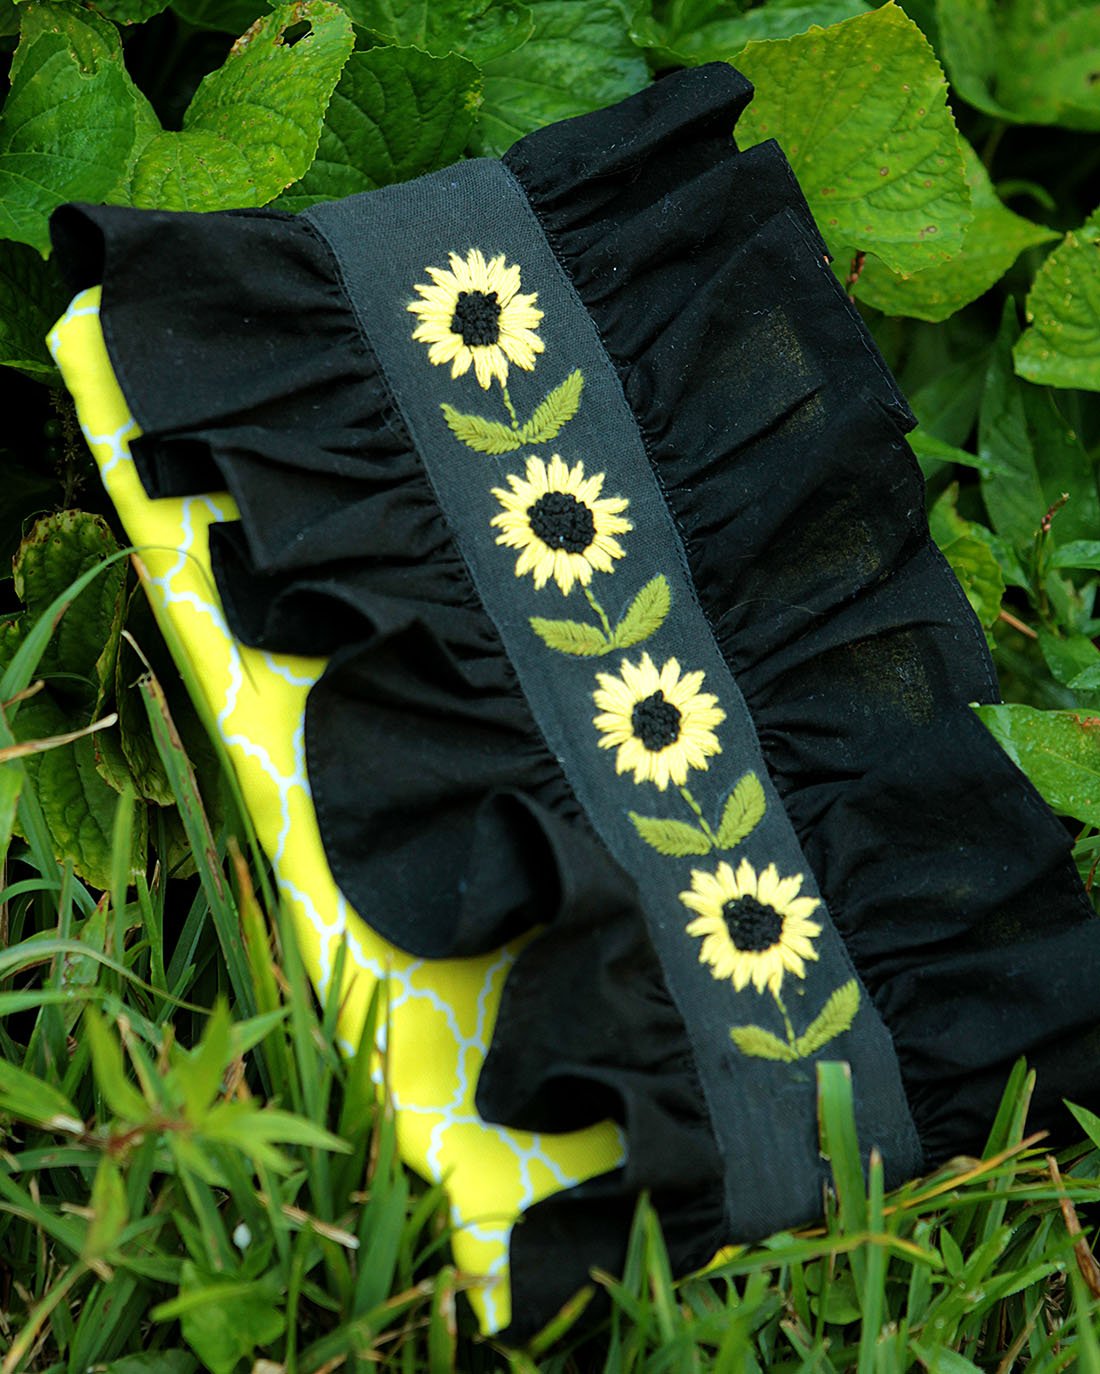 Sunflower Fields Embroidery Pattern | Sunflower Seams Pattern Company | Digital PDF Embroidery Pattern